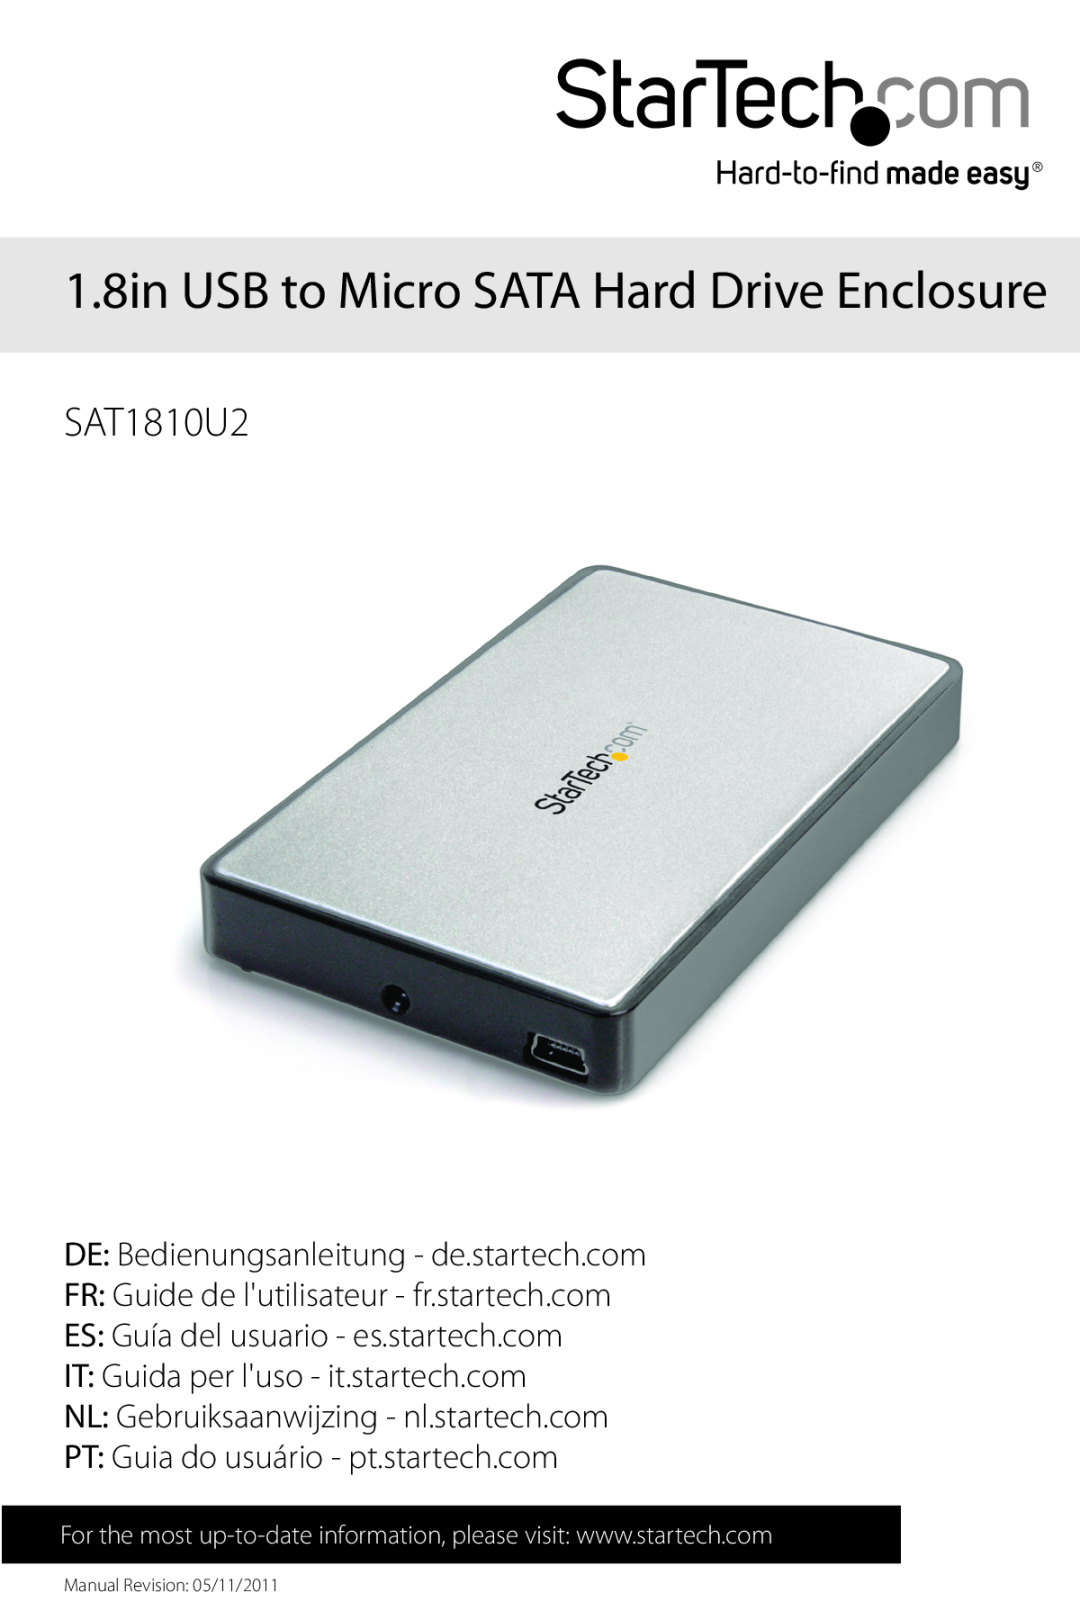 StarTech.com 1.8in usb to micro sata hard drive enclosure manual 1.8in USB to Micro SATA Hard Drive Enclosure, SAT1810U2 